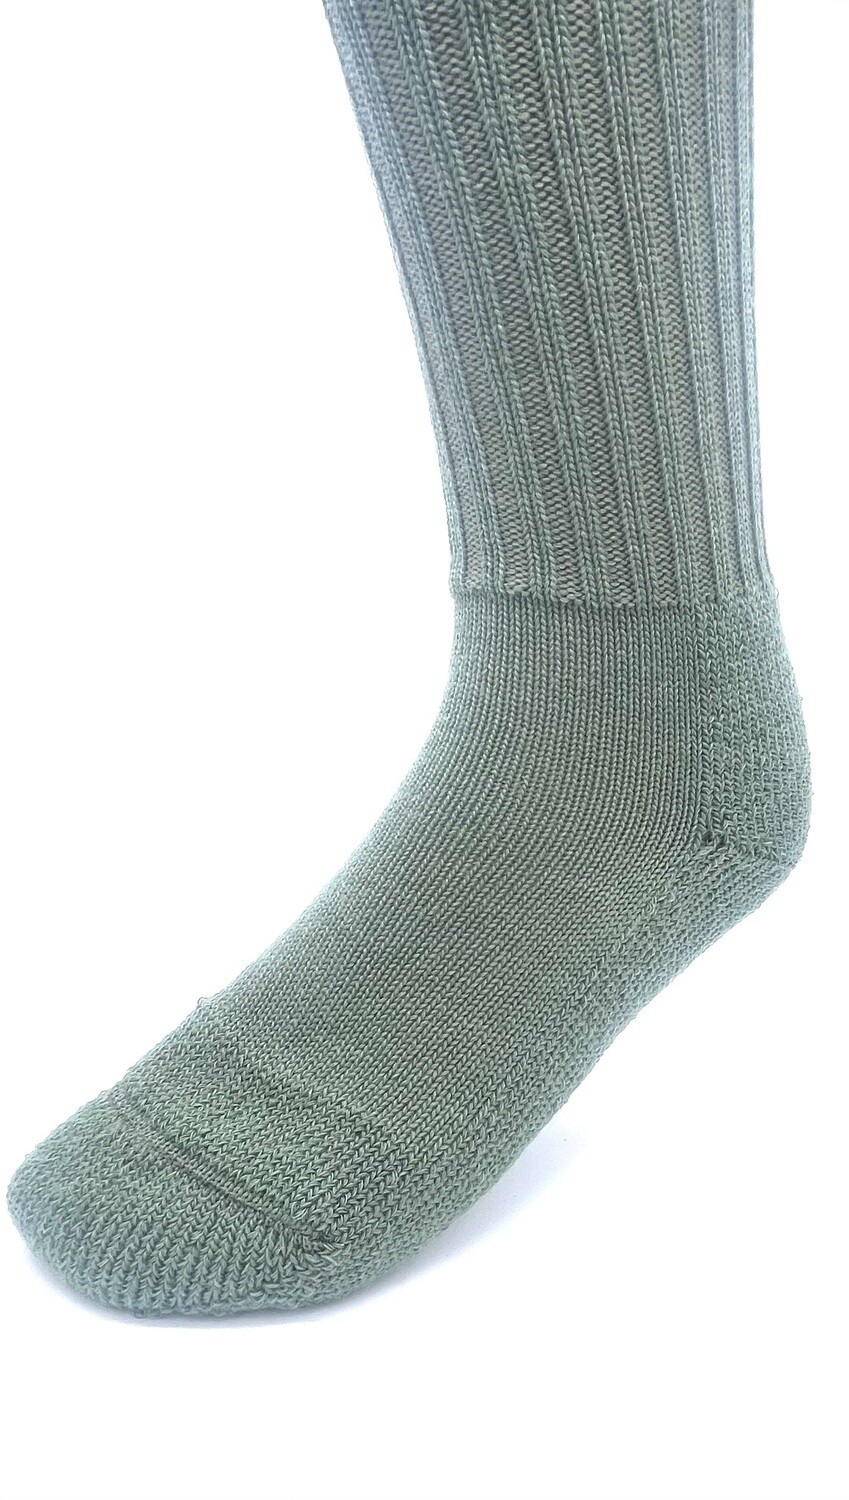 Militär- Socken Wolle Tanner Grün